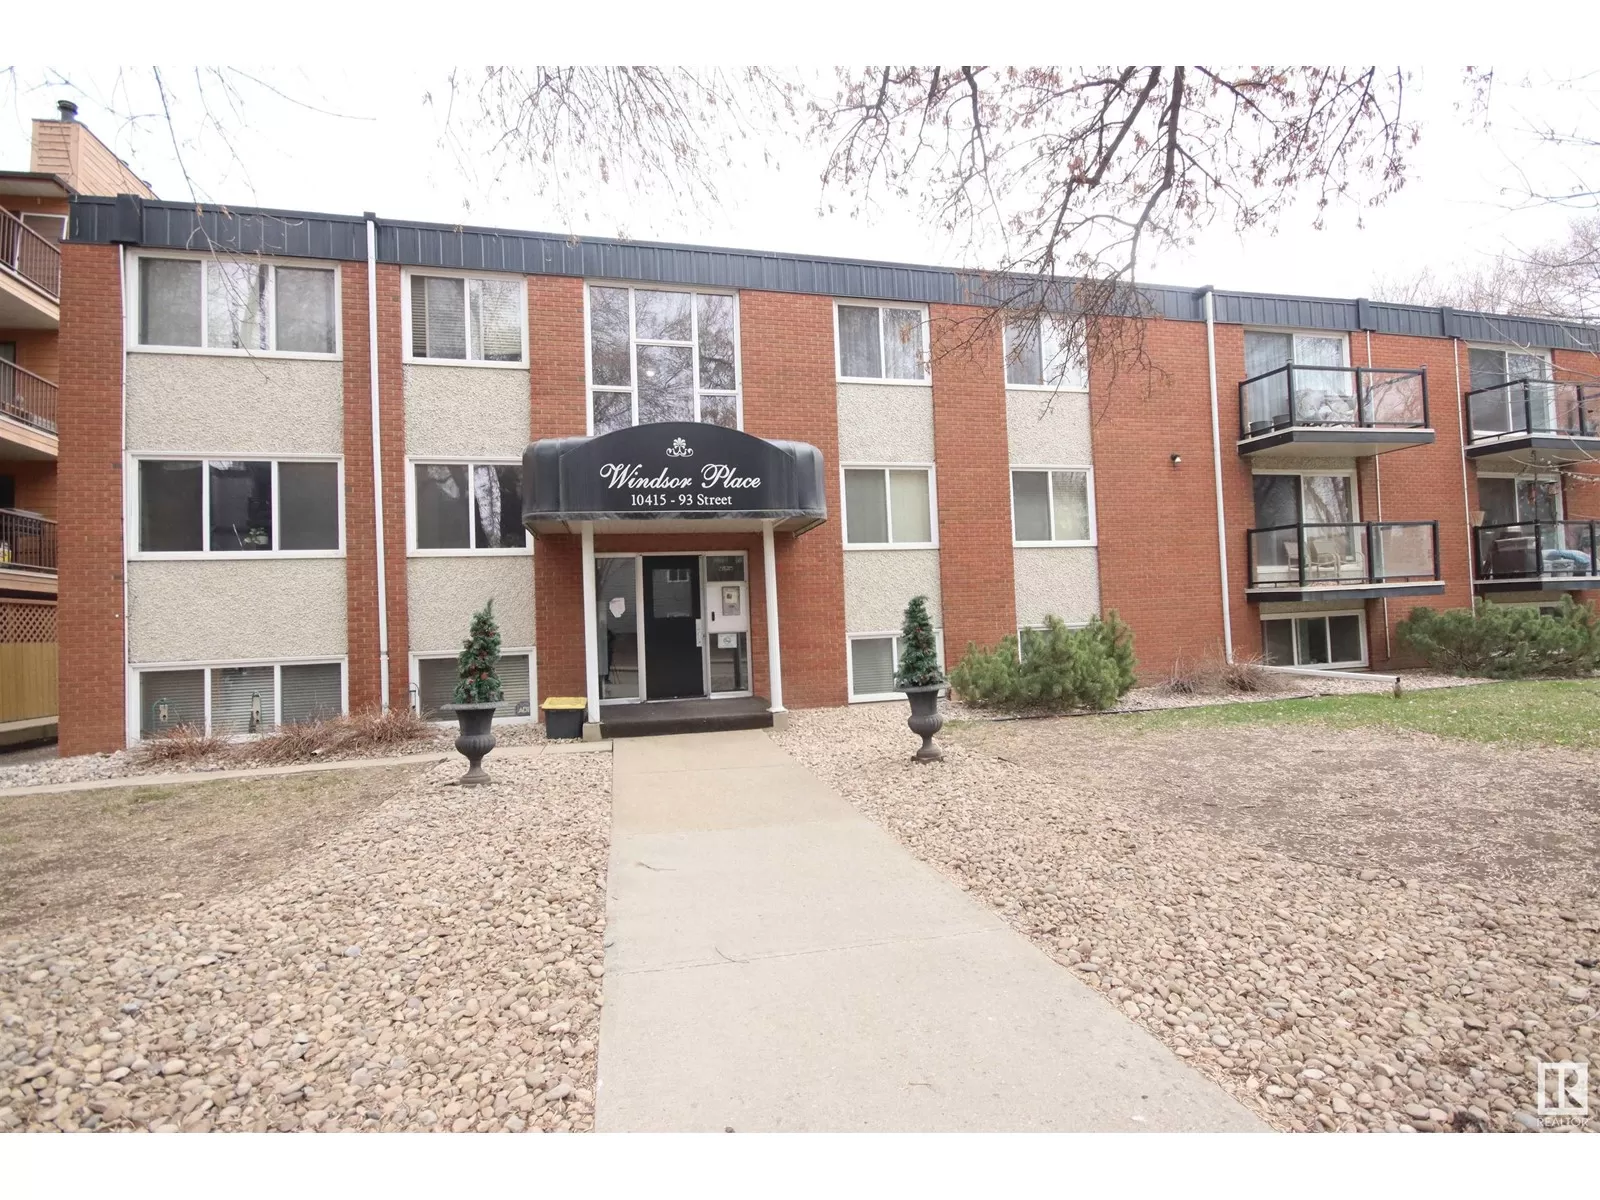 Apartment for rent: #301 10415 93 St Nw, Edmonton, Alberta T5H 1X5